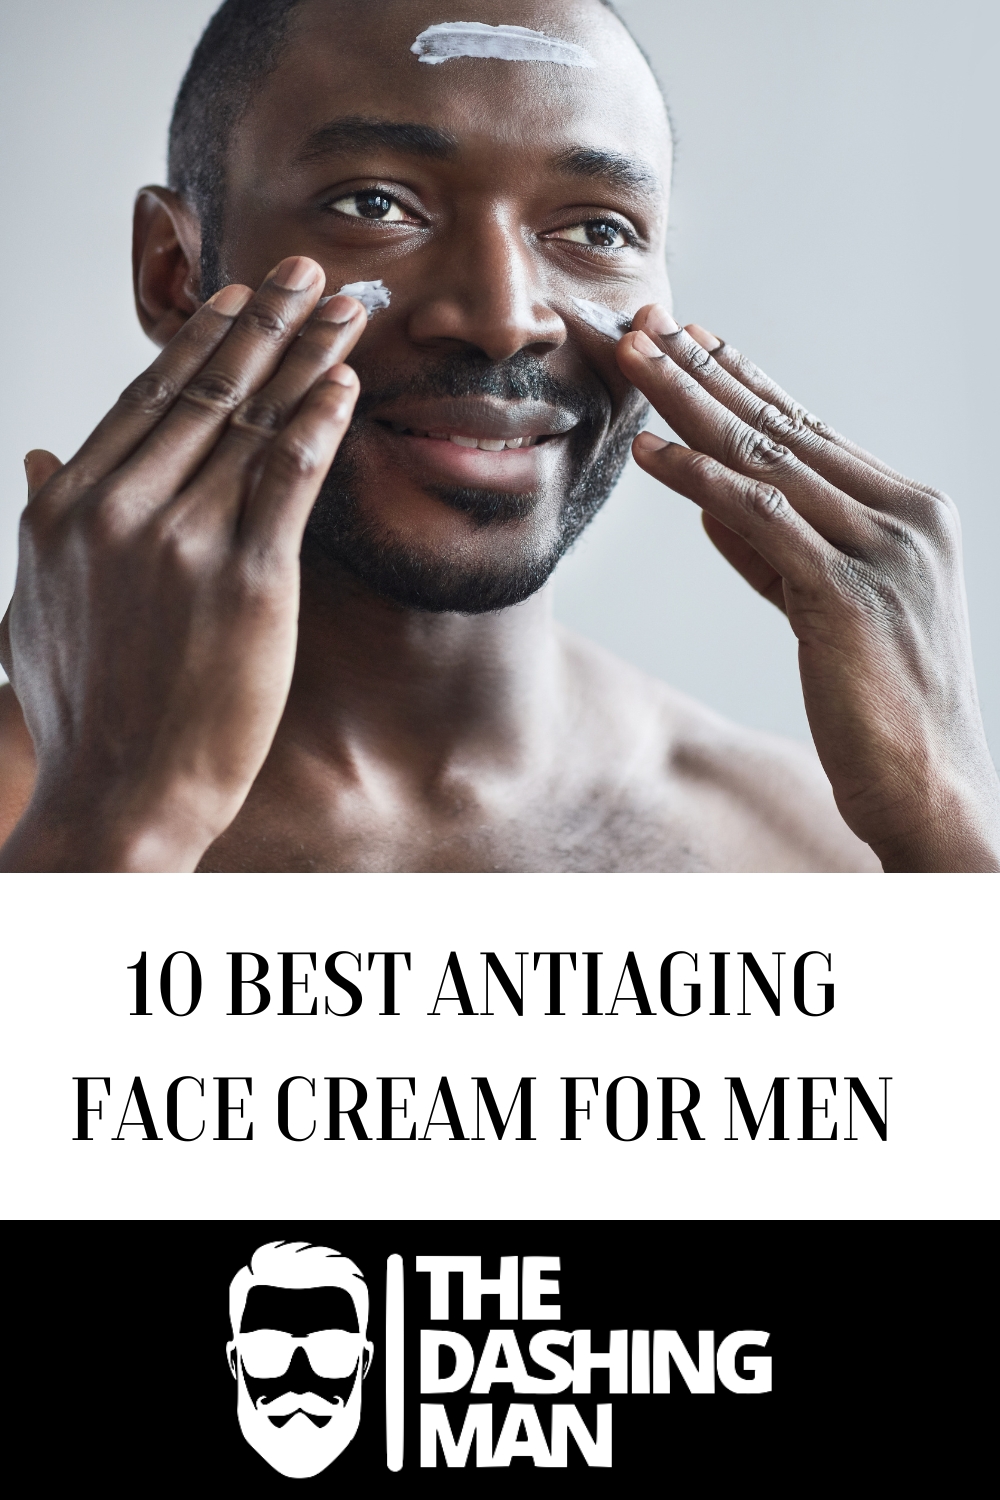 Face Cream for Men